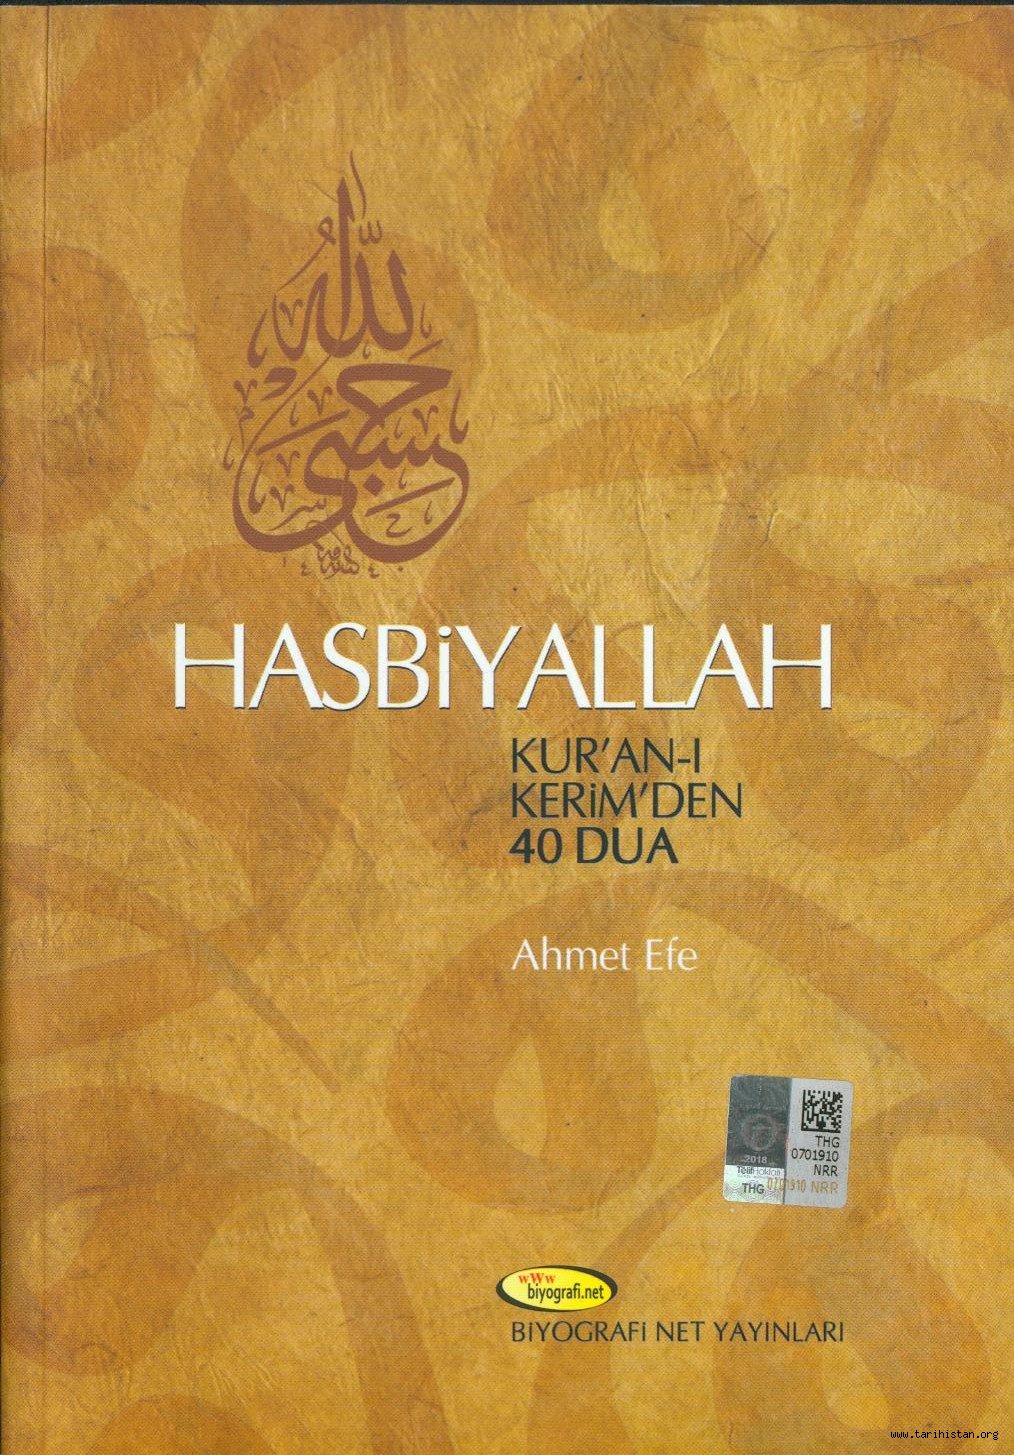 "Hasbiyallah"